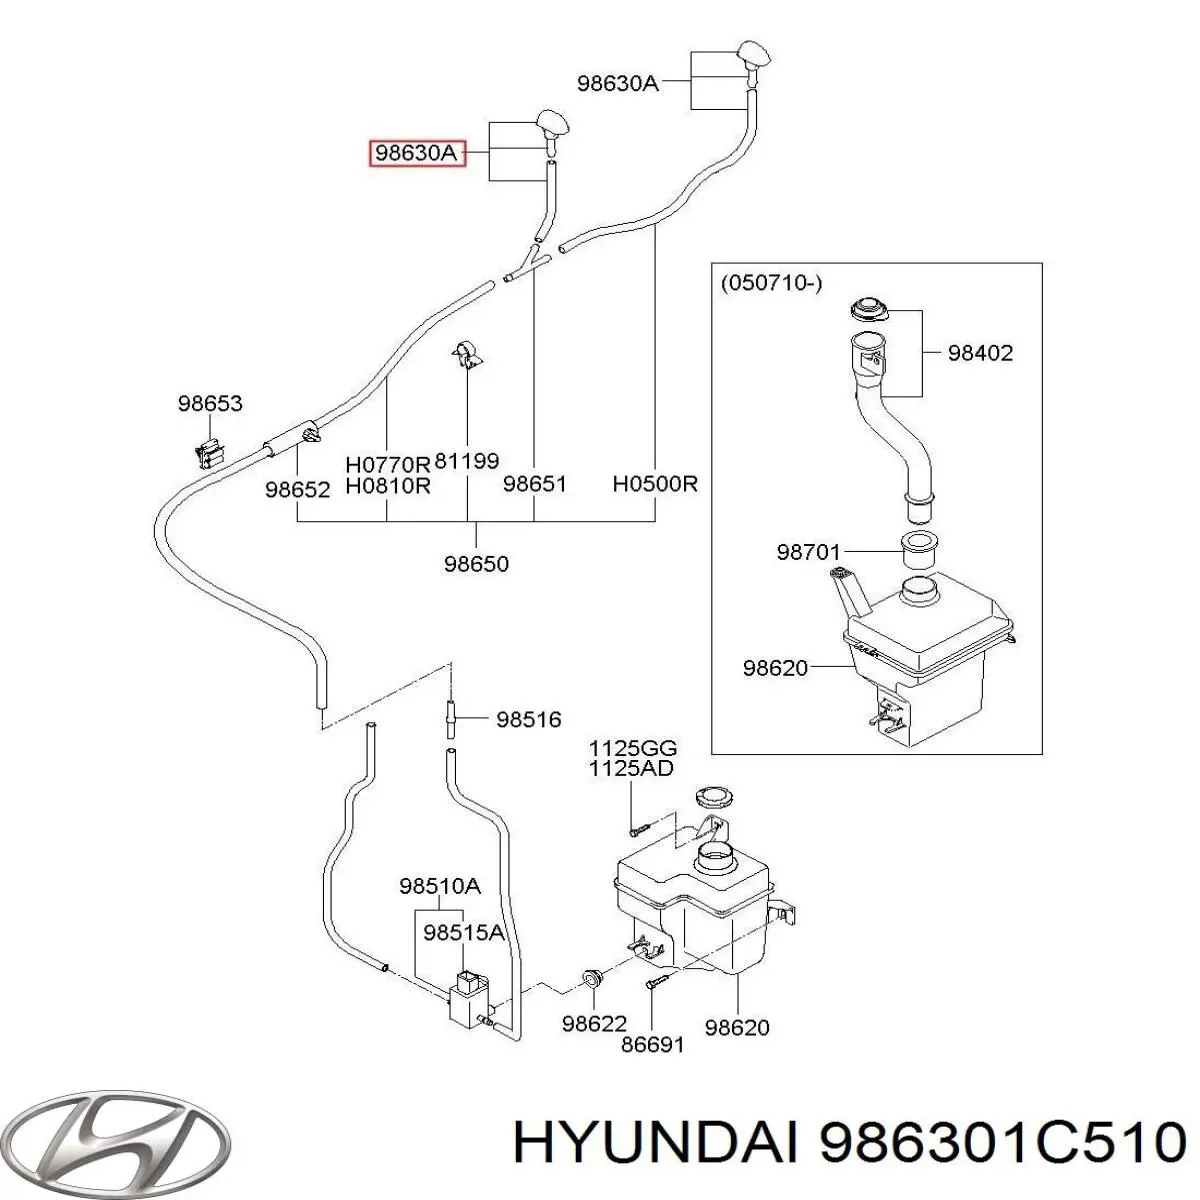 986301C510 Hyundai/Kia tobera de agua regadora, lavado de parabrisas